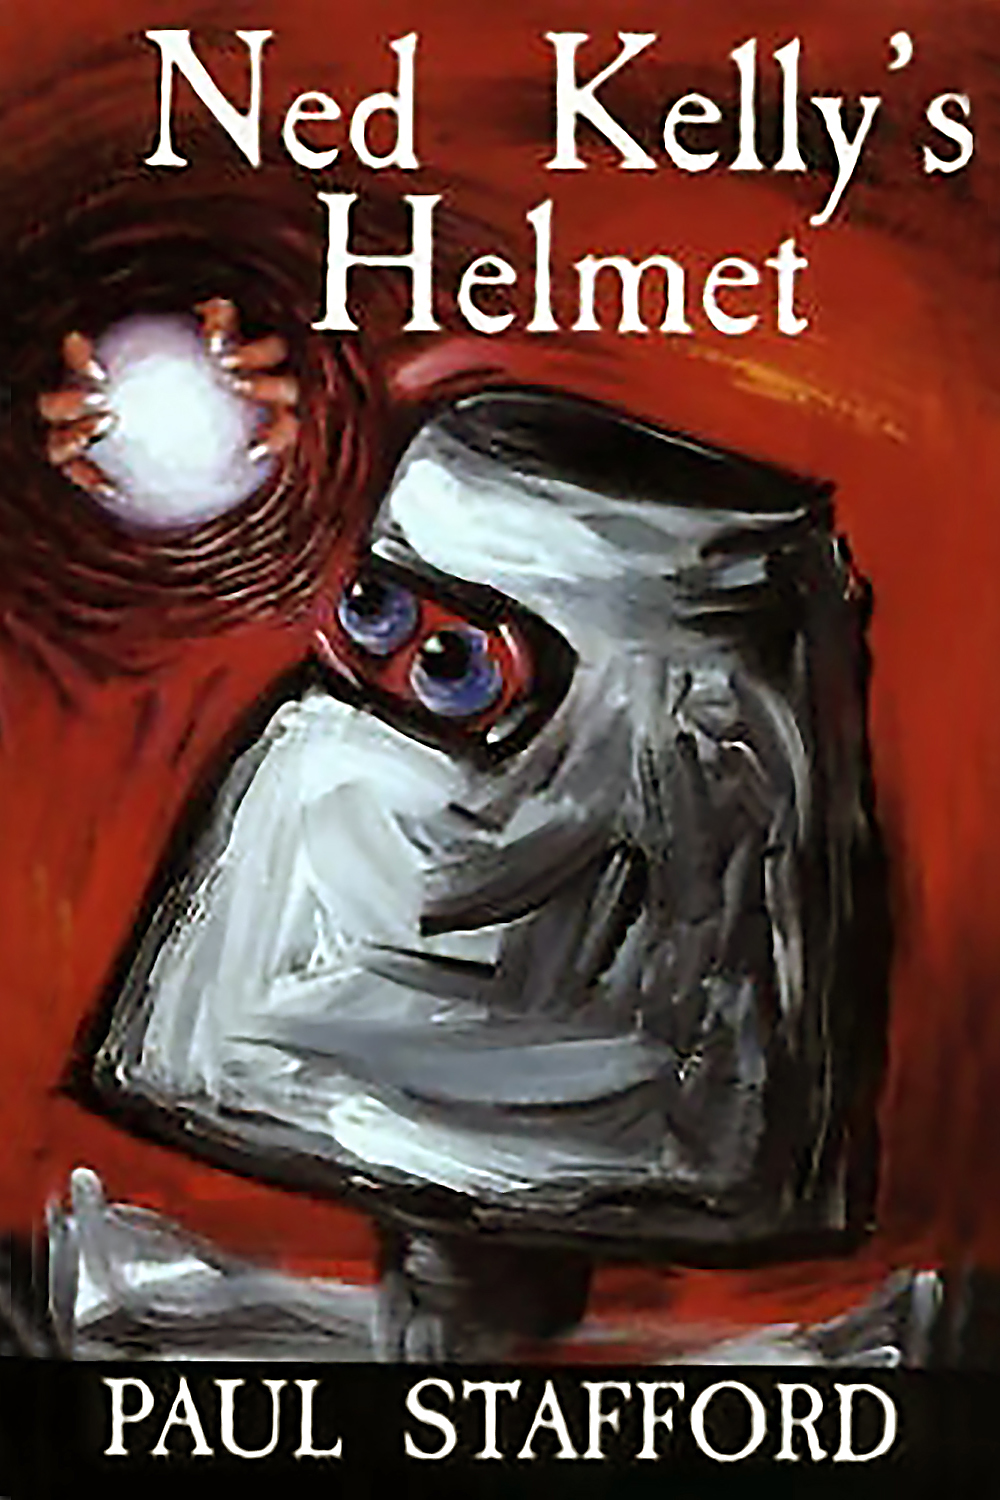 Ned Kelly's Helmet by Paul Stafford